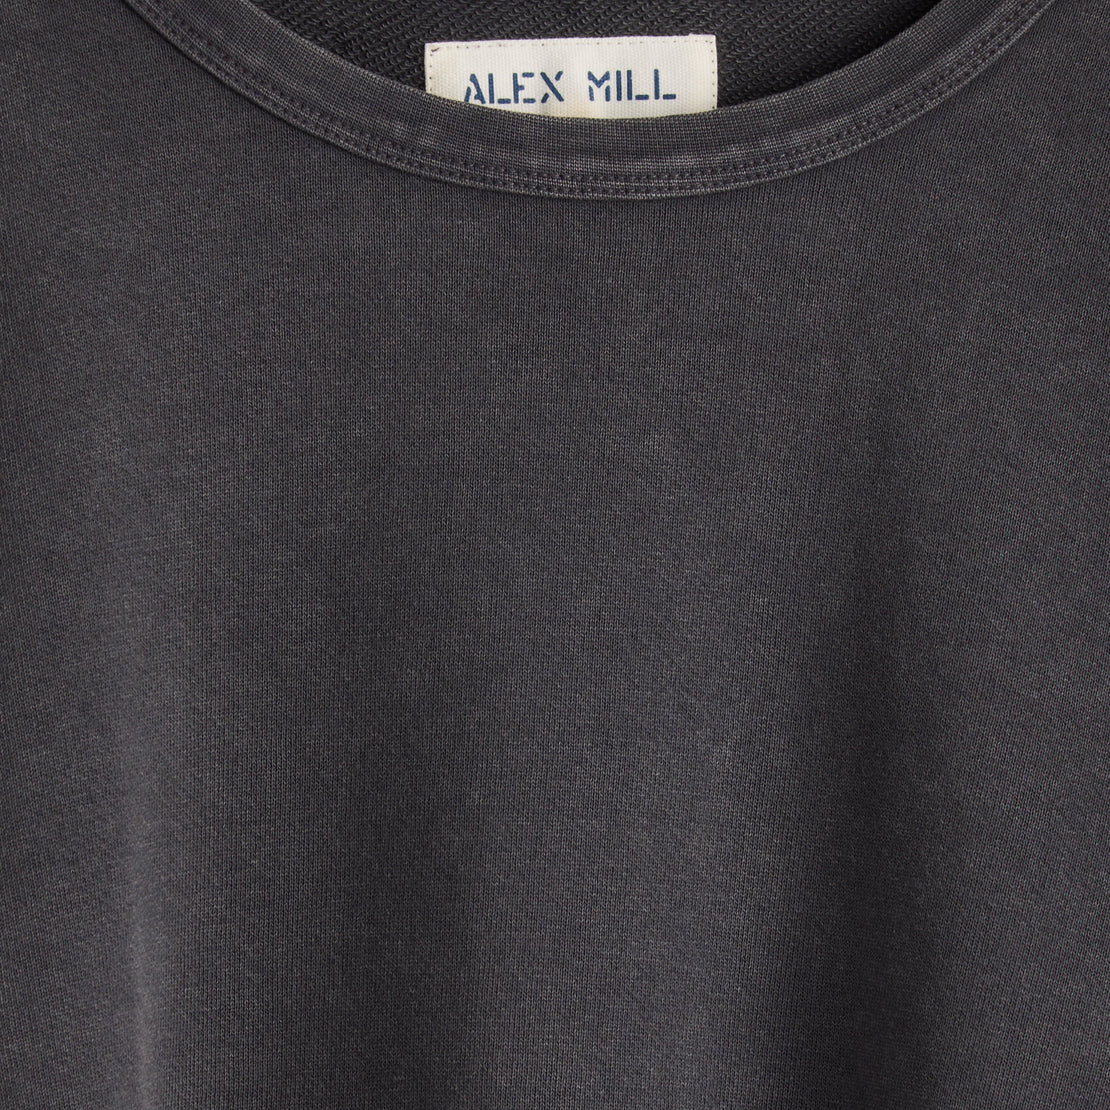 Frankie Vintage Sweatshirt - Washed Black - Alex Mill - STAG Provisions - W - Tops - L/S Knit